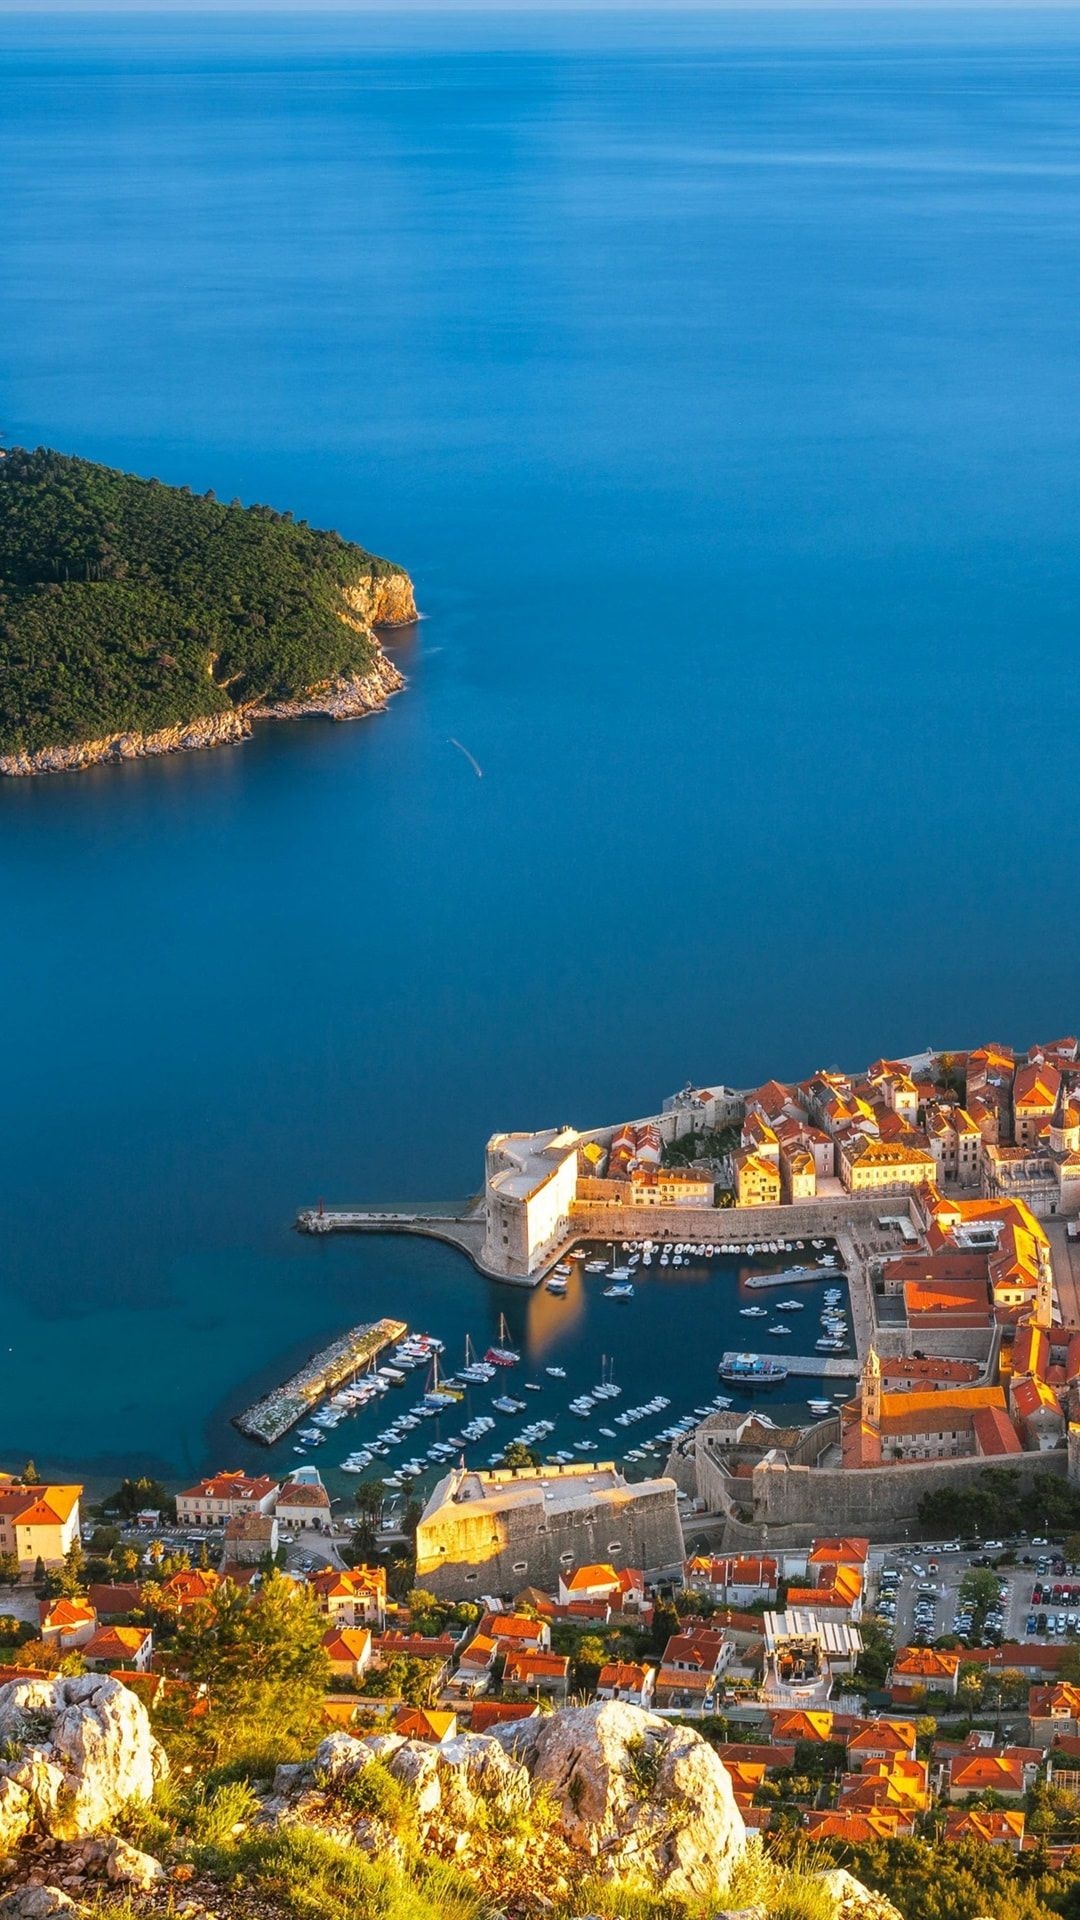 Croatia: Dubrovnik, An important Mediterranean sea power from the 13th century onwards. 1080x1920 Full HD Wallpaper.